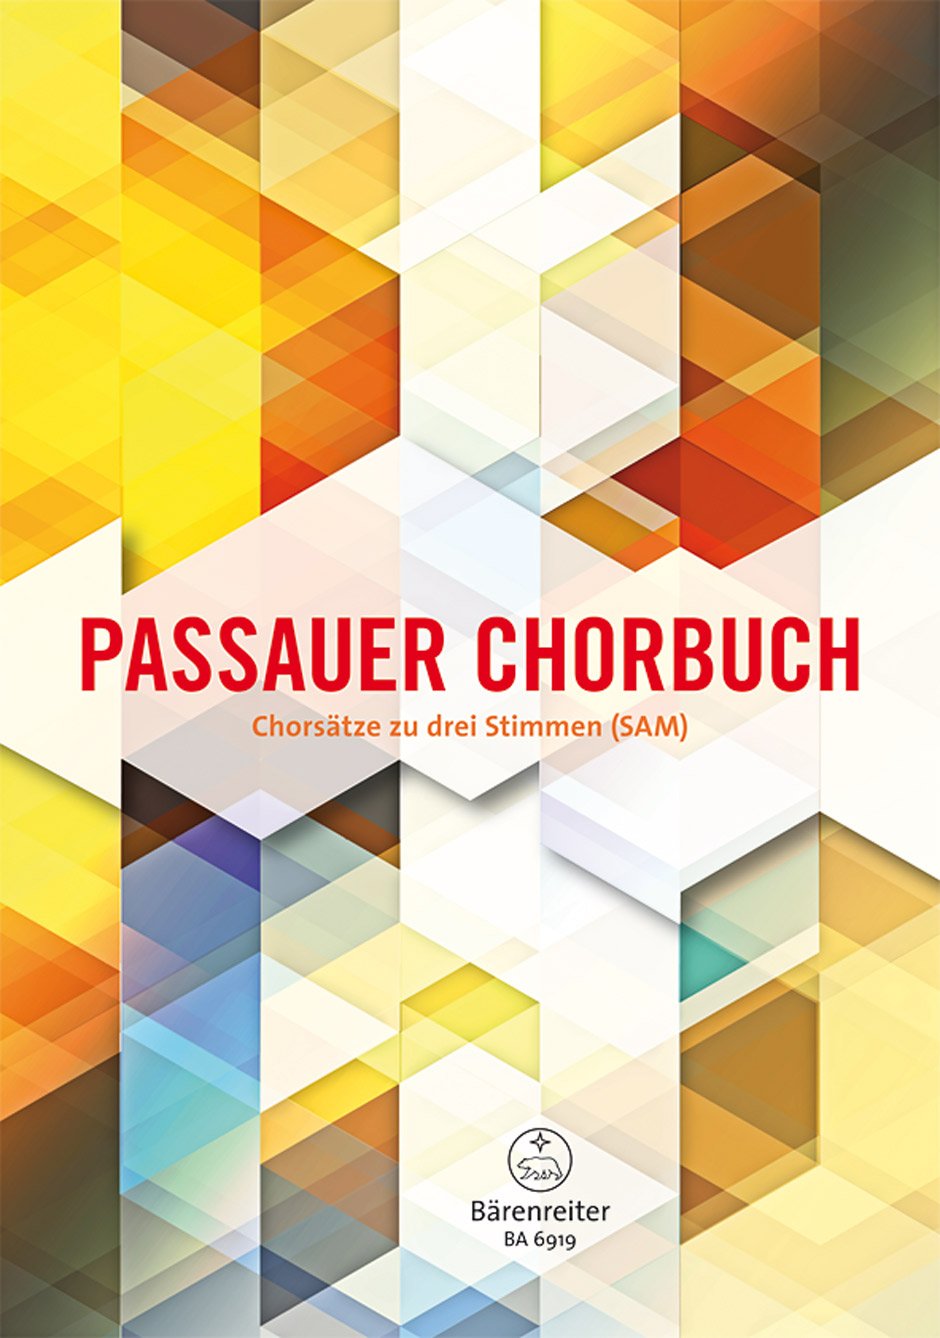 Passauer Chorbuch. Chorsätze zu drei Stimmen (SAM)